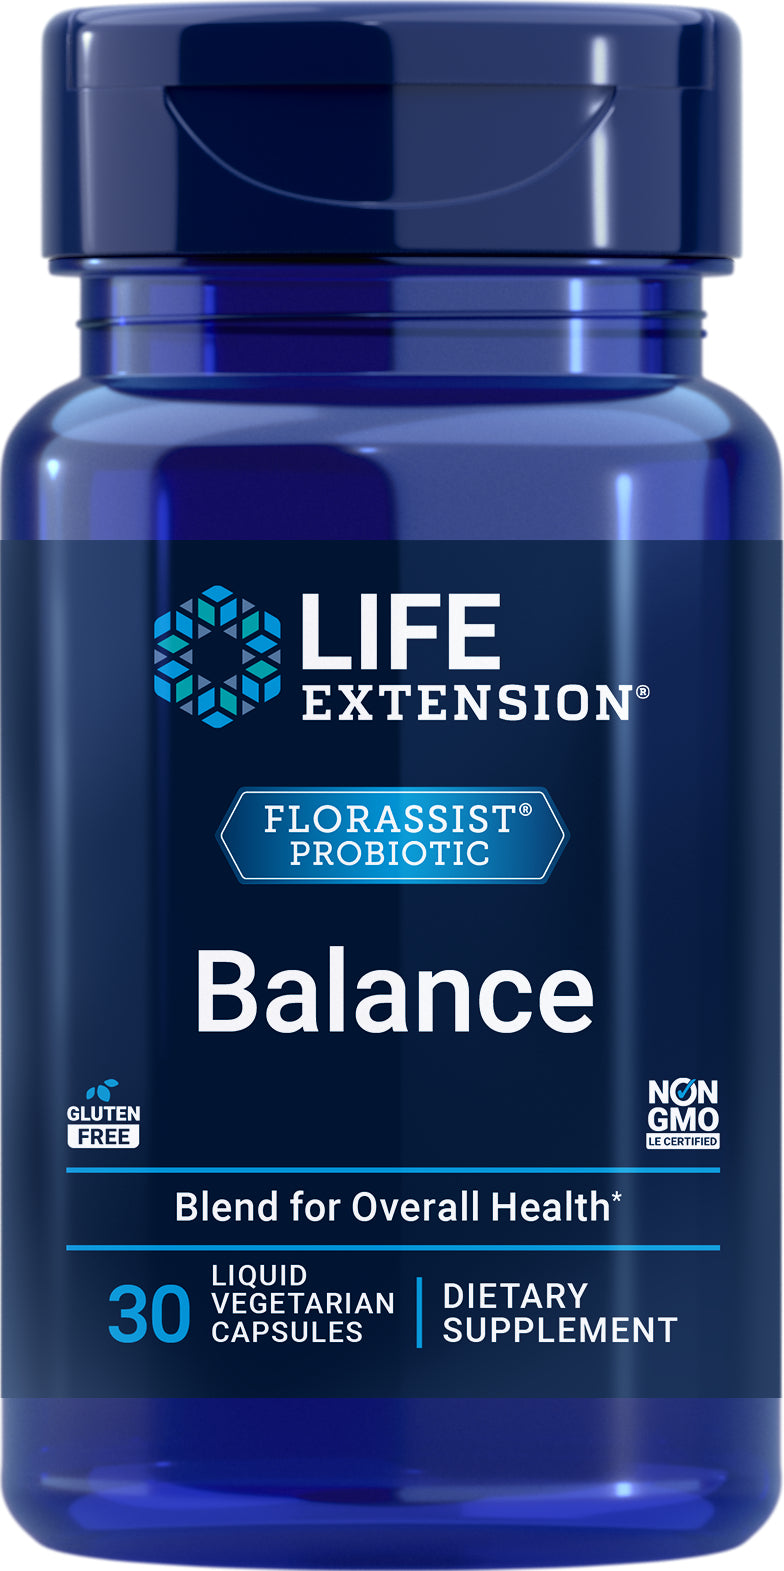 FLORASSIST® Balance 30 liquid veg caps by Life Extension